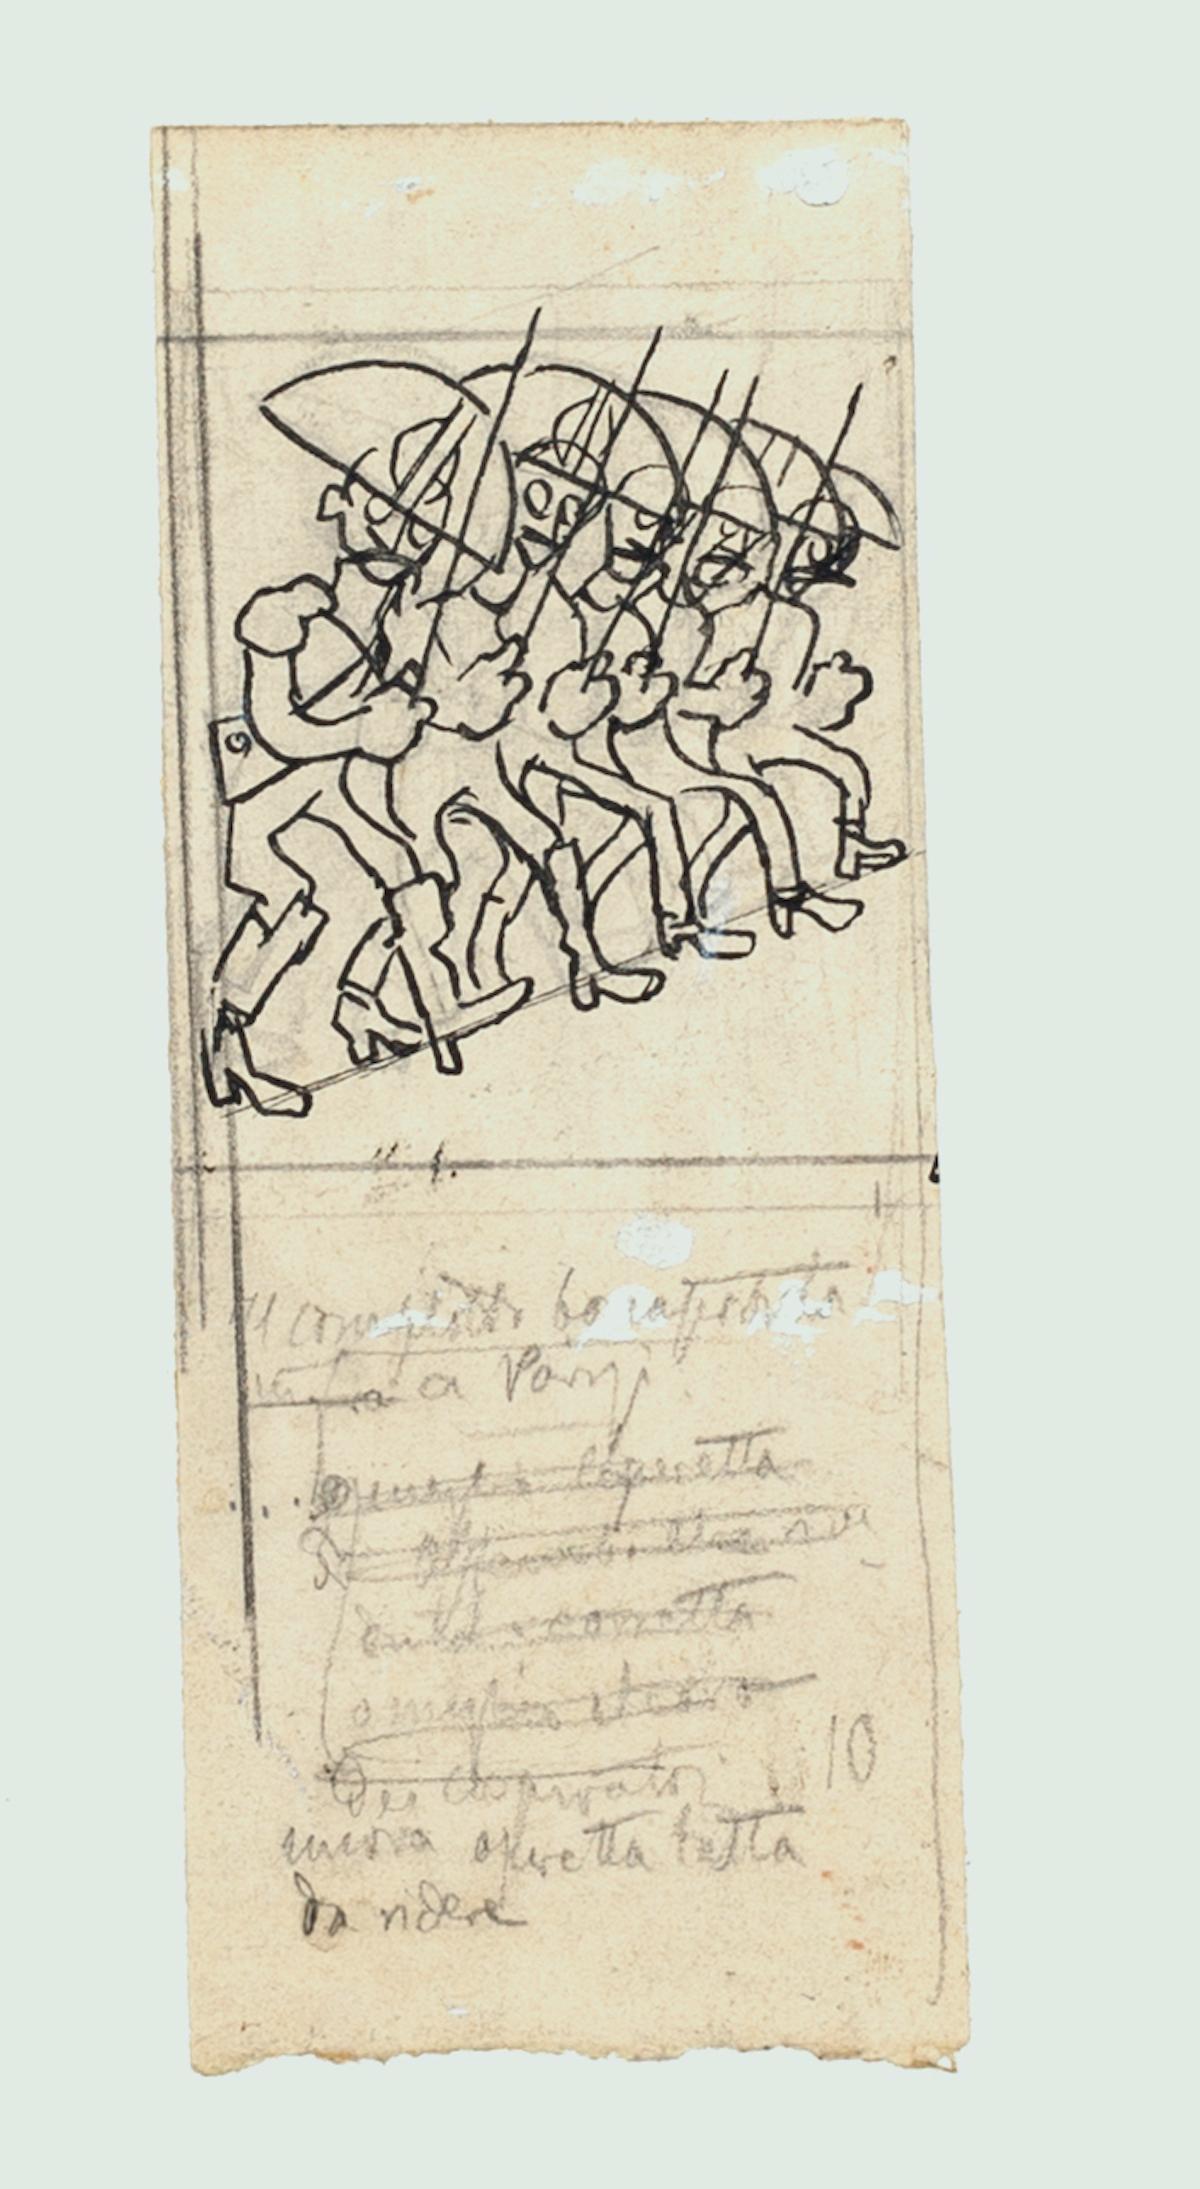 Figures - Ink and Pencil Drawing by G. Galantara - Early 20th Century - Art by Gabriele Galantara